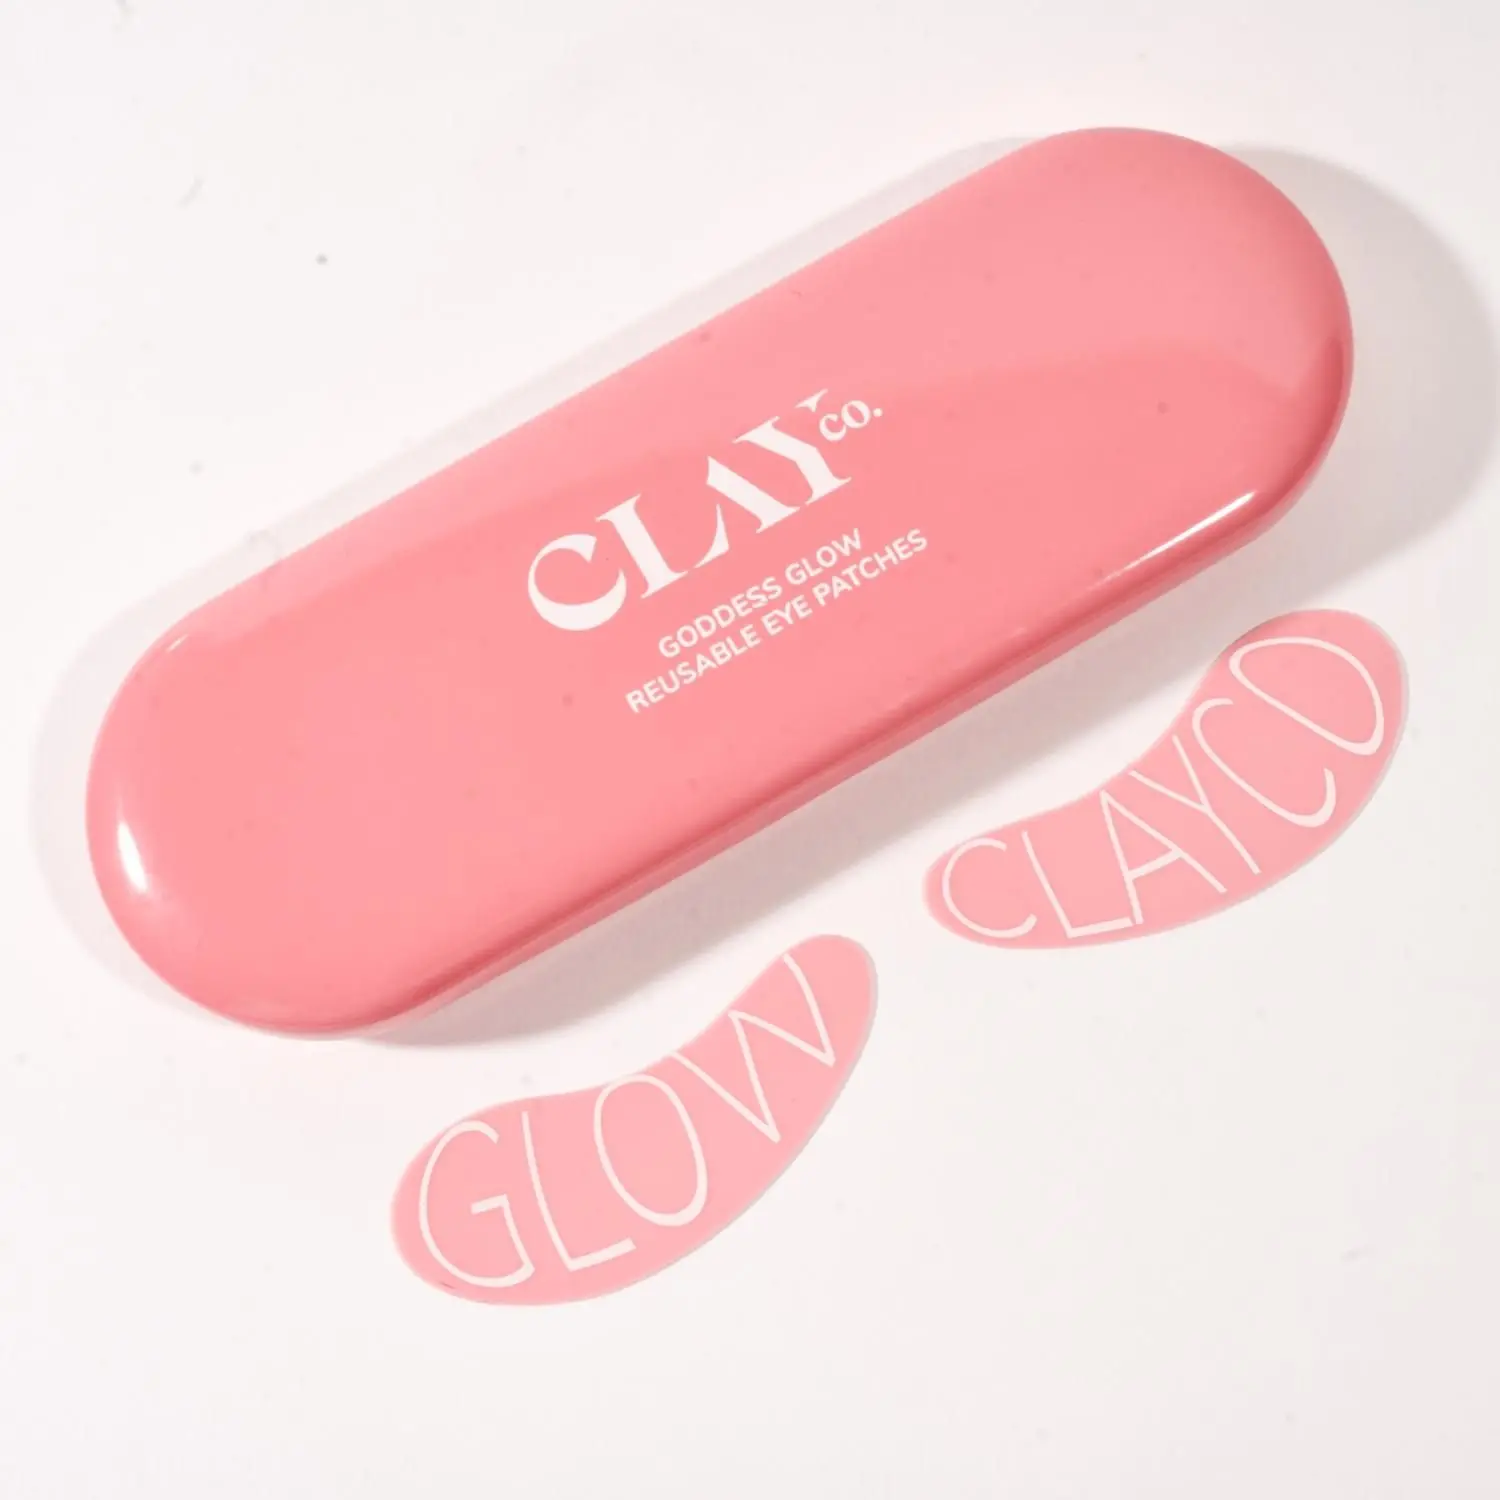 ClayCo Goddess Glow Re-useable Eye Mask 20 gm